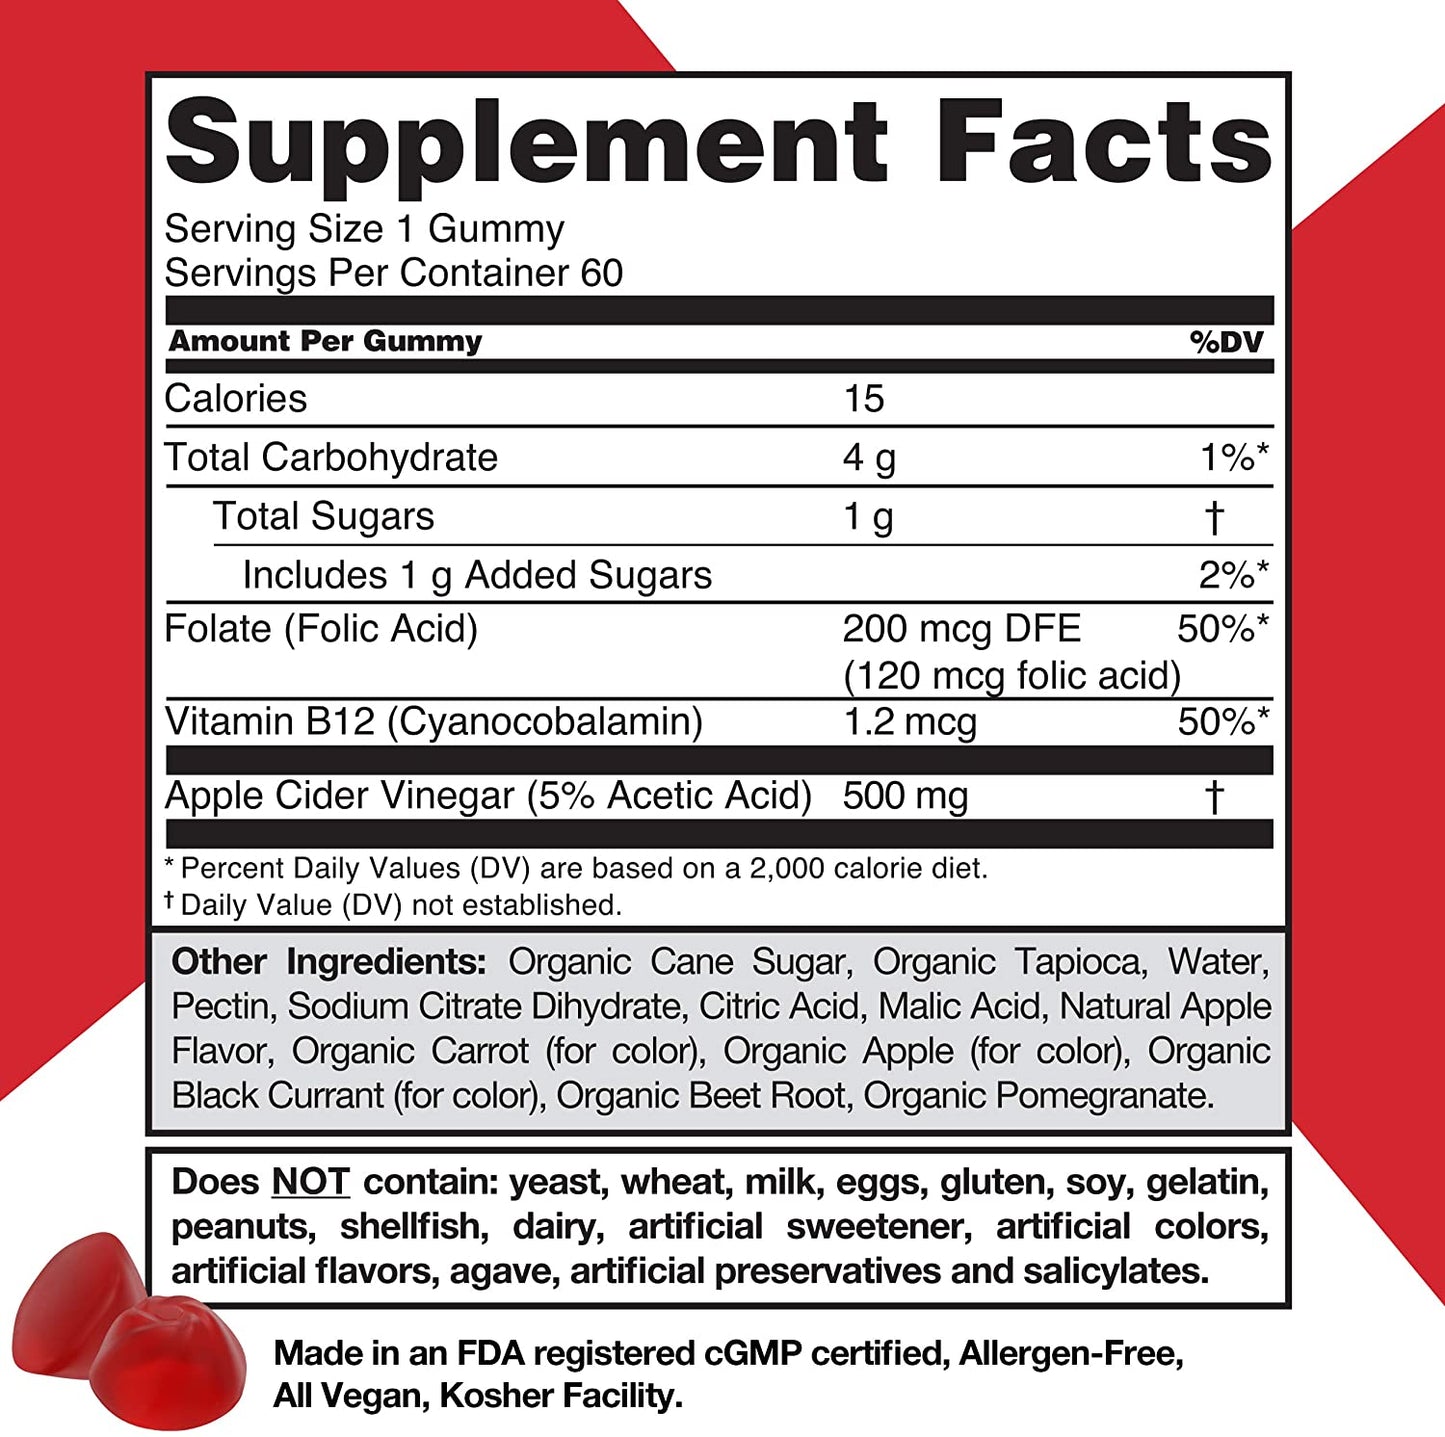 Goli Nutrition | Apple Cider Vinegar Gummies | Immunity and Detox | 60pcs each, 2 packs